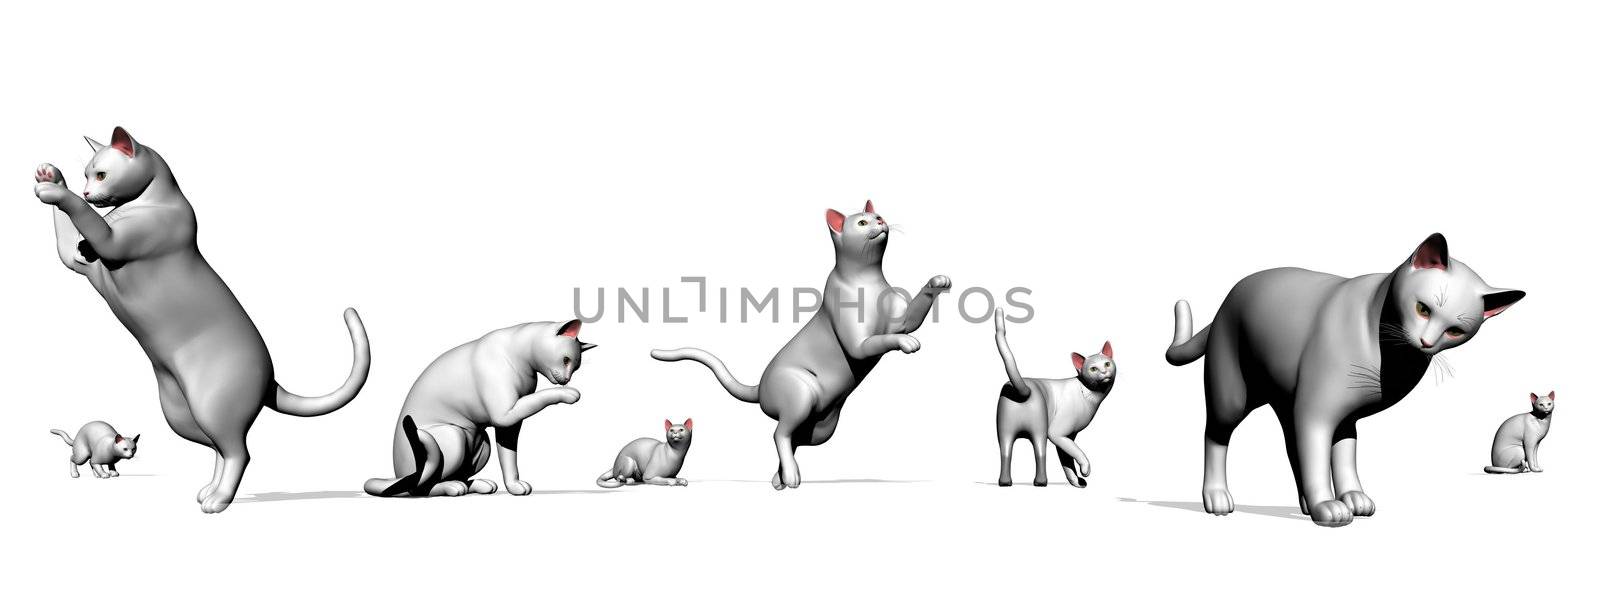 Set of cat poses by Elenaphotos21